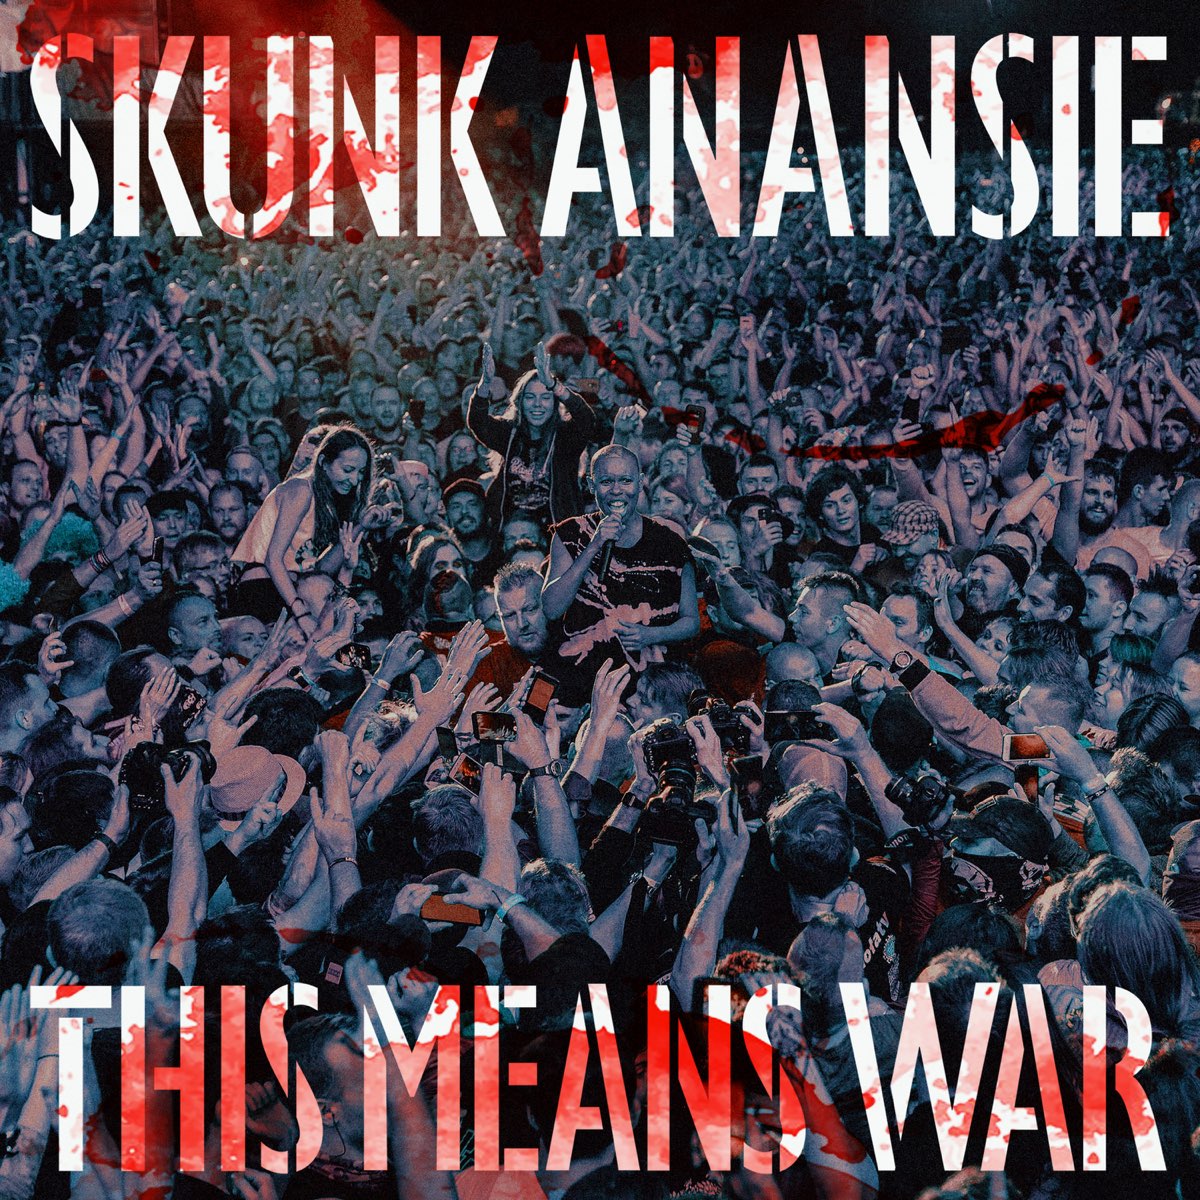 Skunk Anansie — This Means War cover artwork